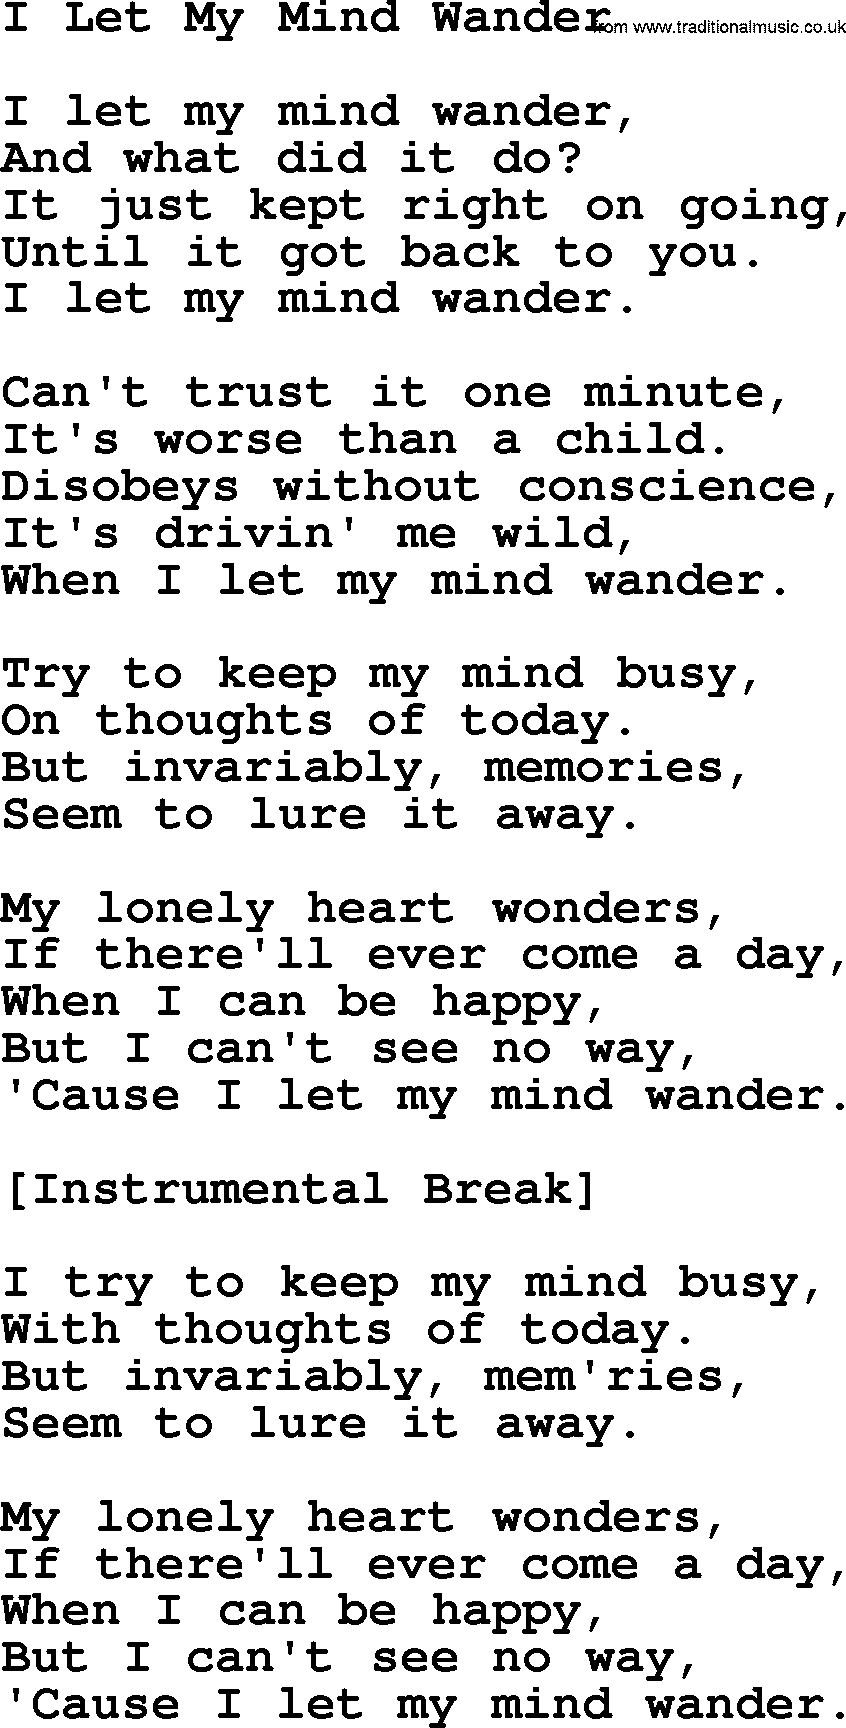 Willie Nelson song: I Let My Mind Wander lyrics